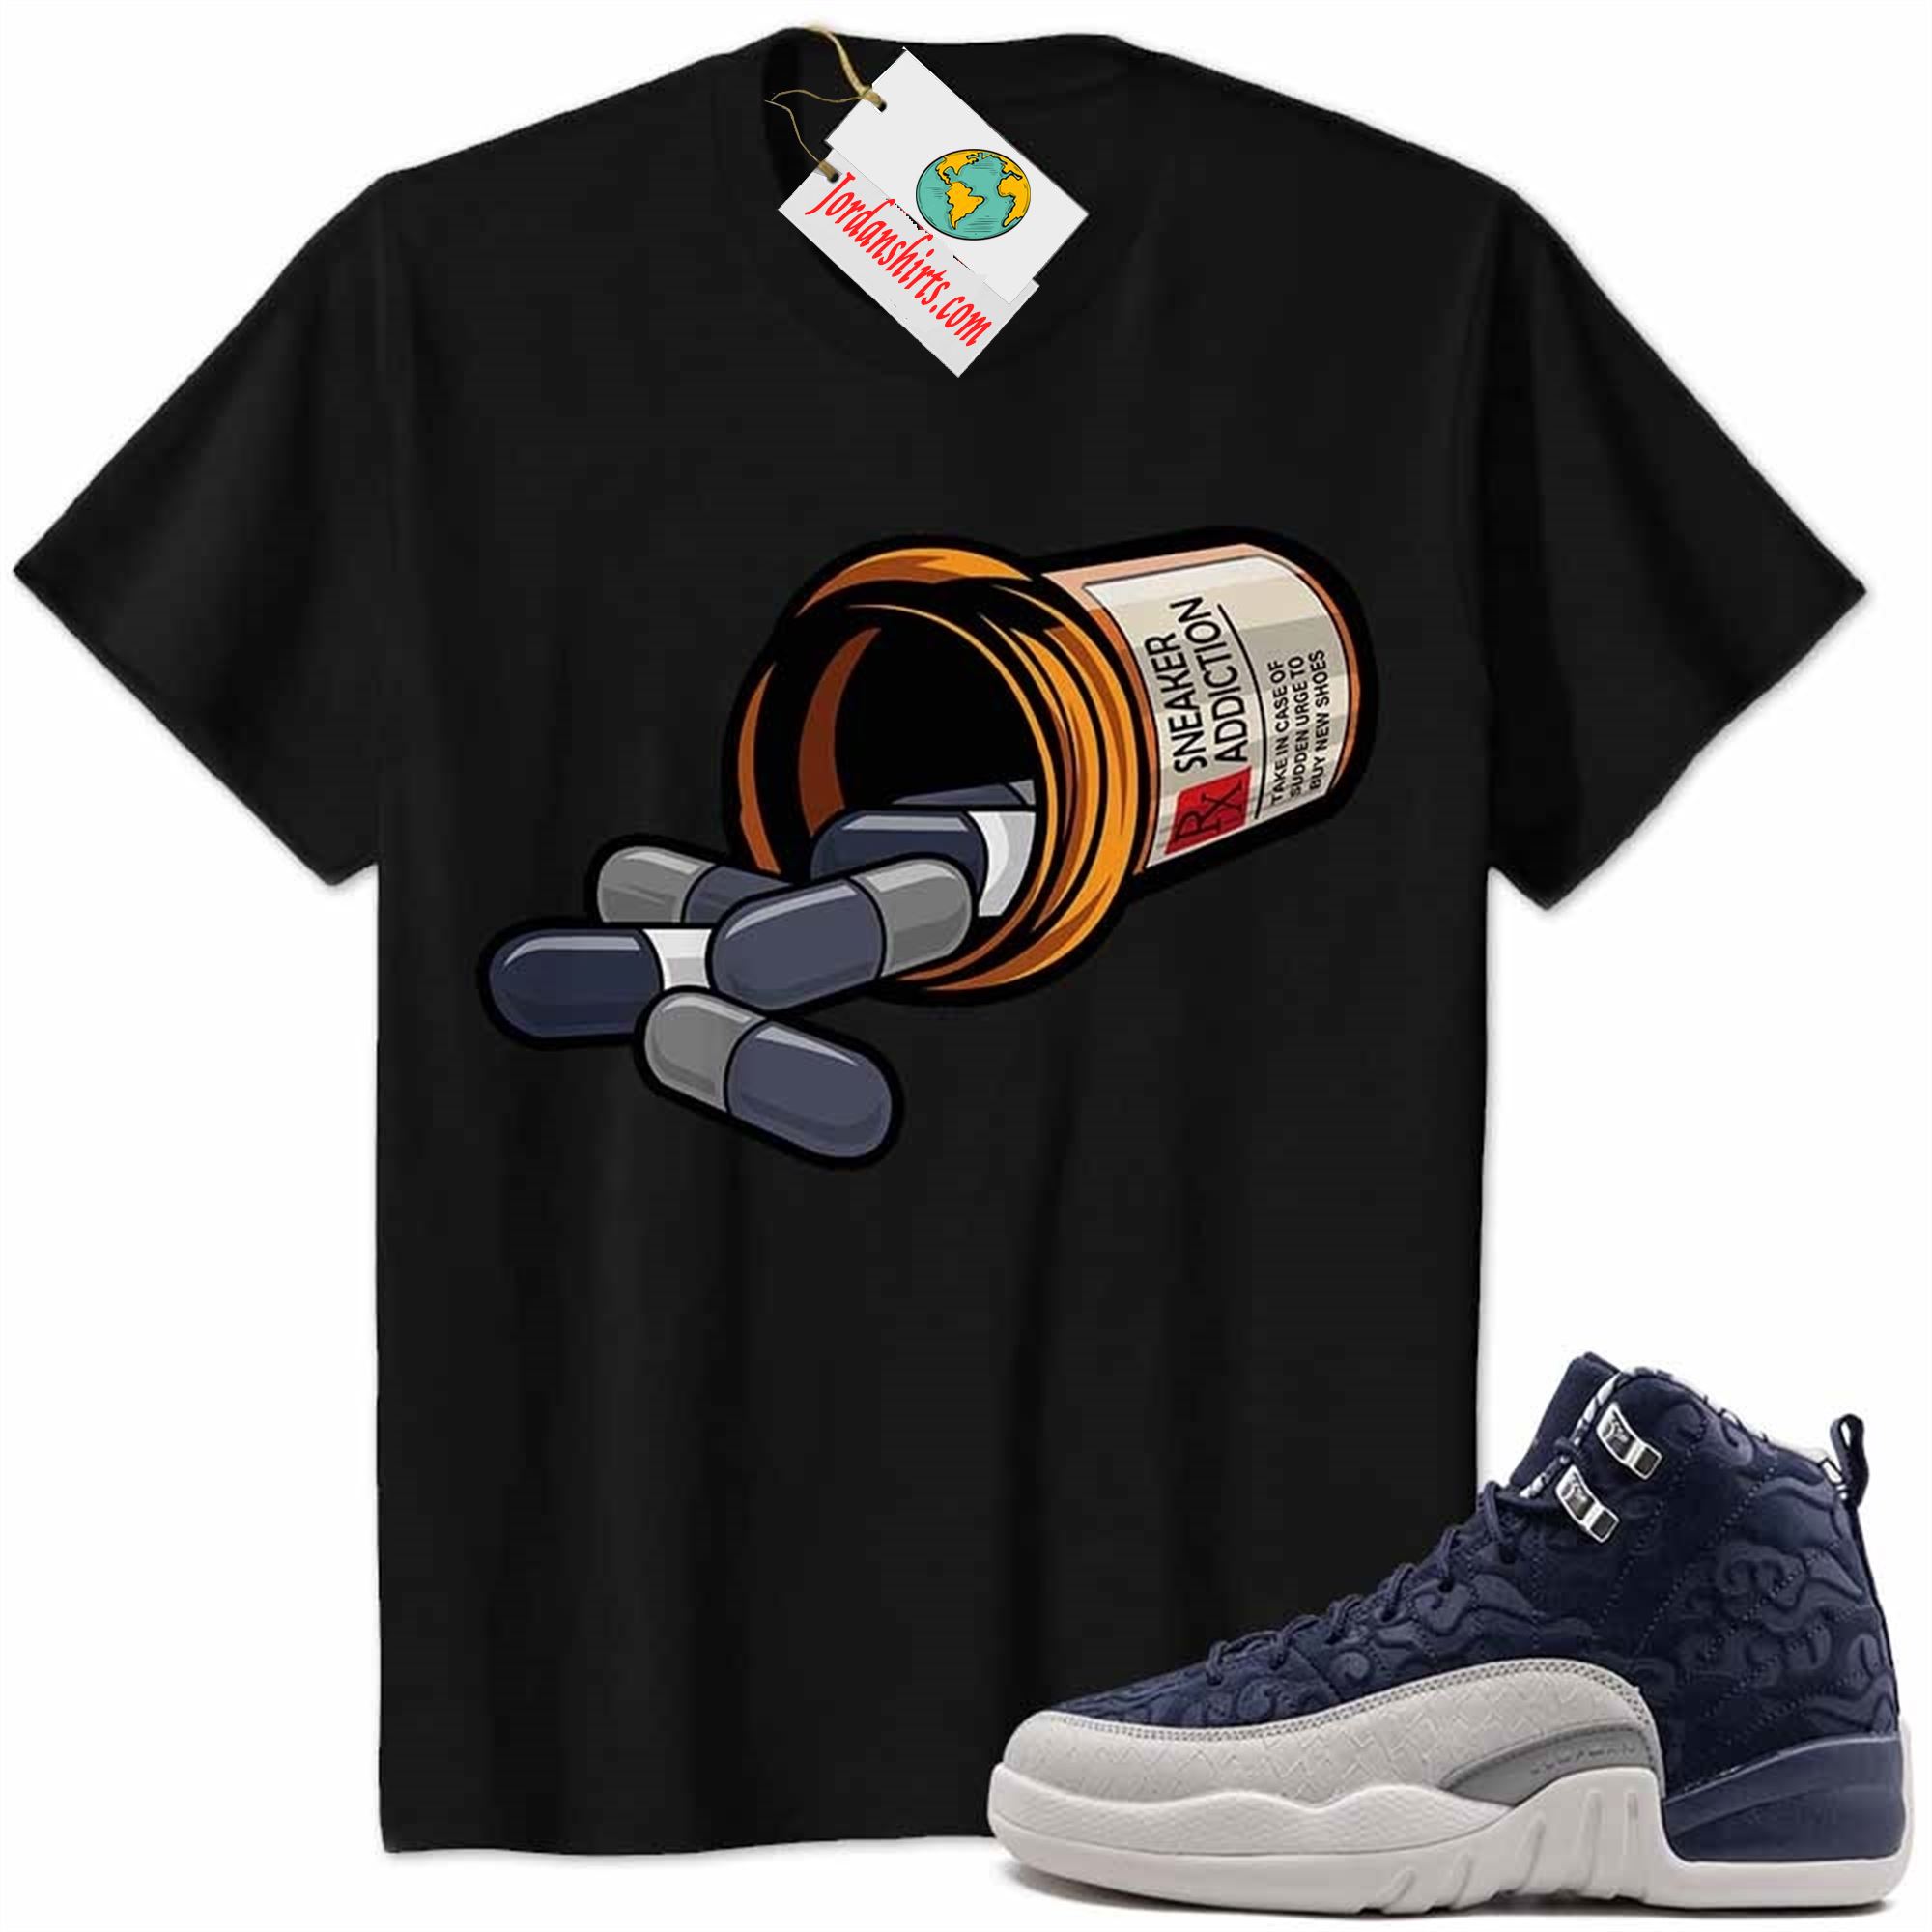 Jordan 12 Shirt, Rx Drugs Pill Bottle Sneaker Addiction Black Air Jordan 12 International Flight 12s Size Up To 5xl